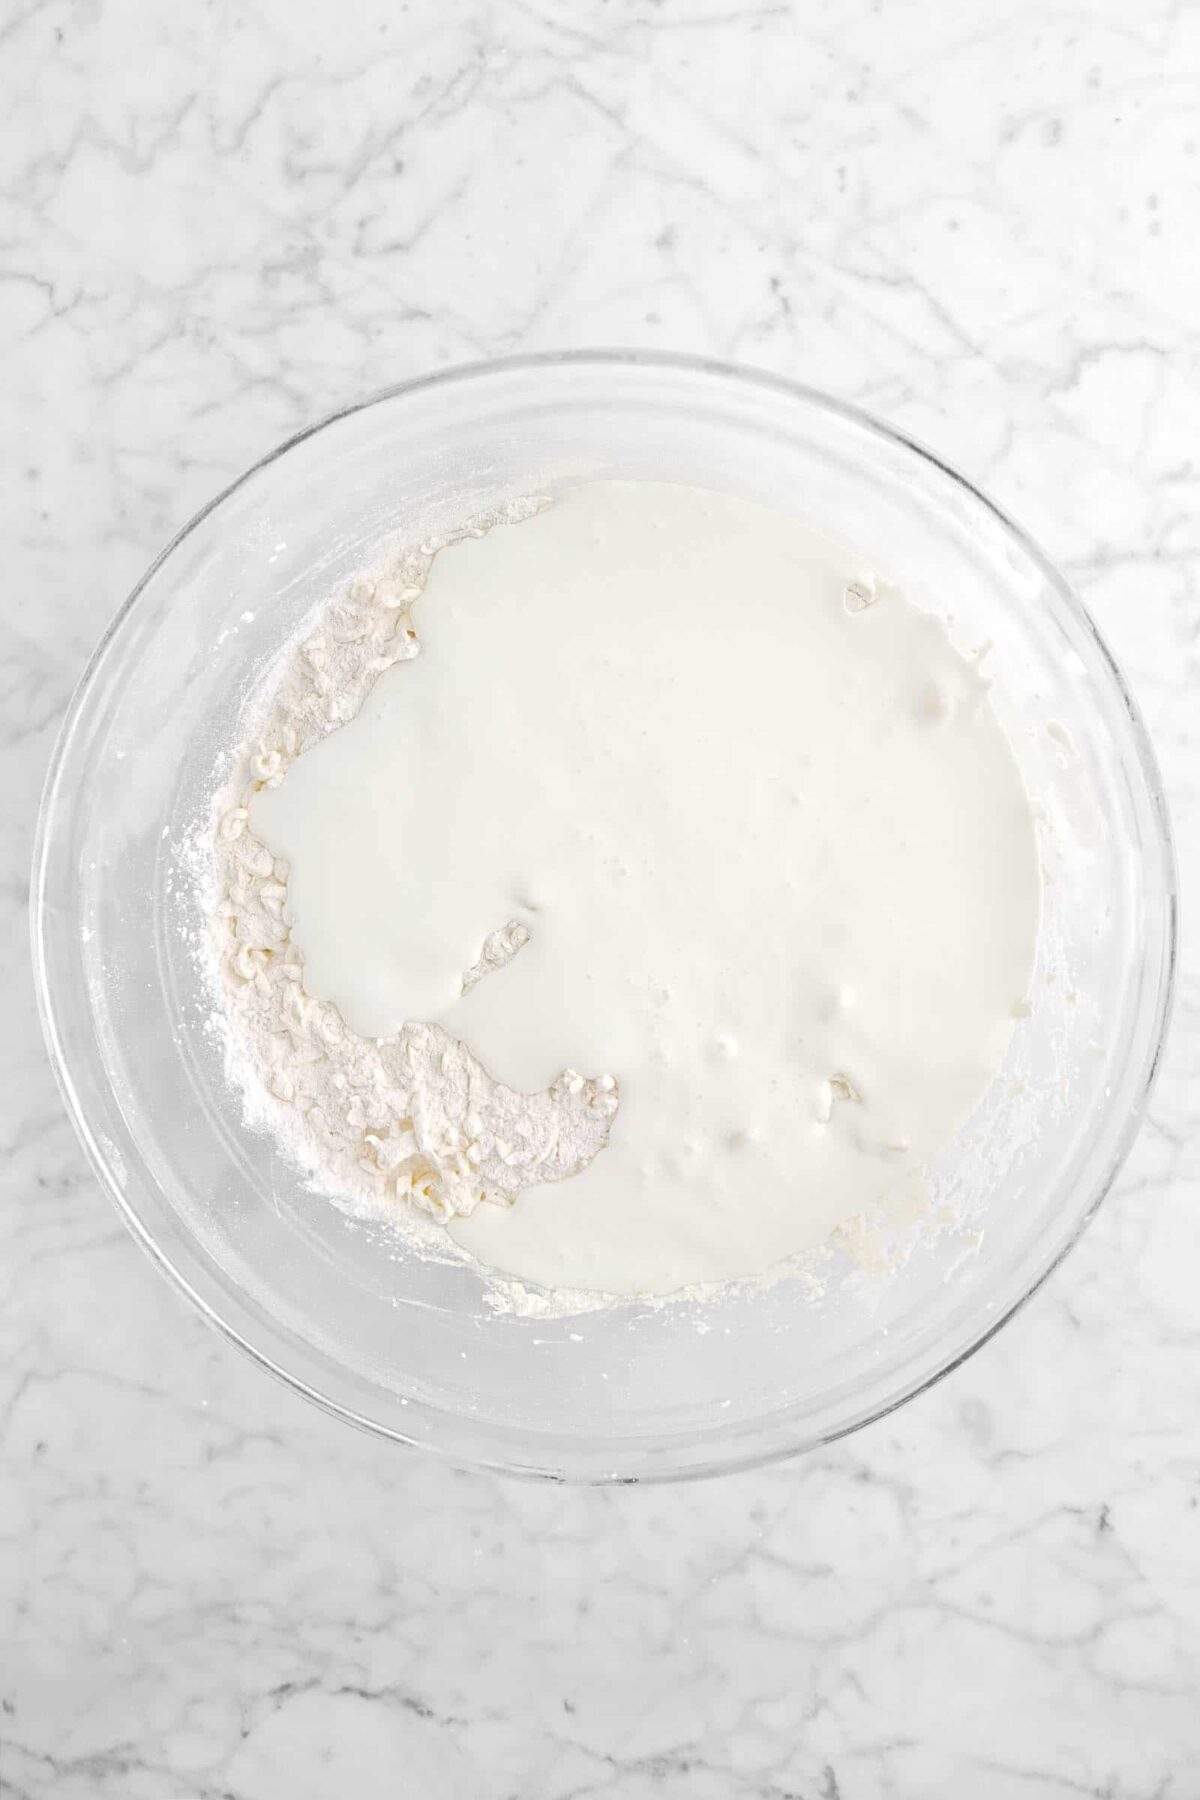 buttermilk mixture added to flour mixture